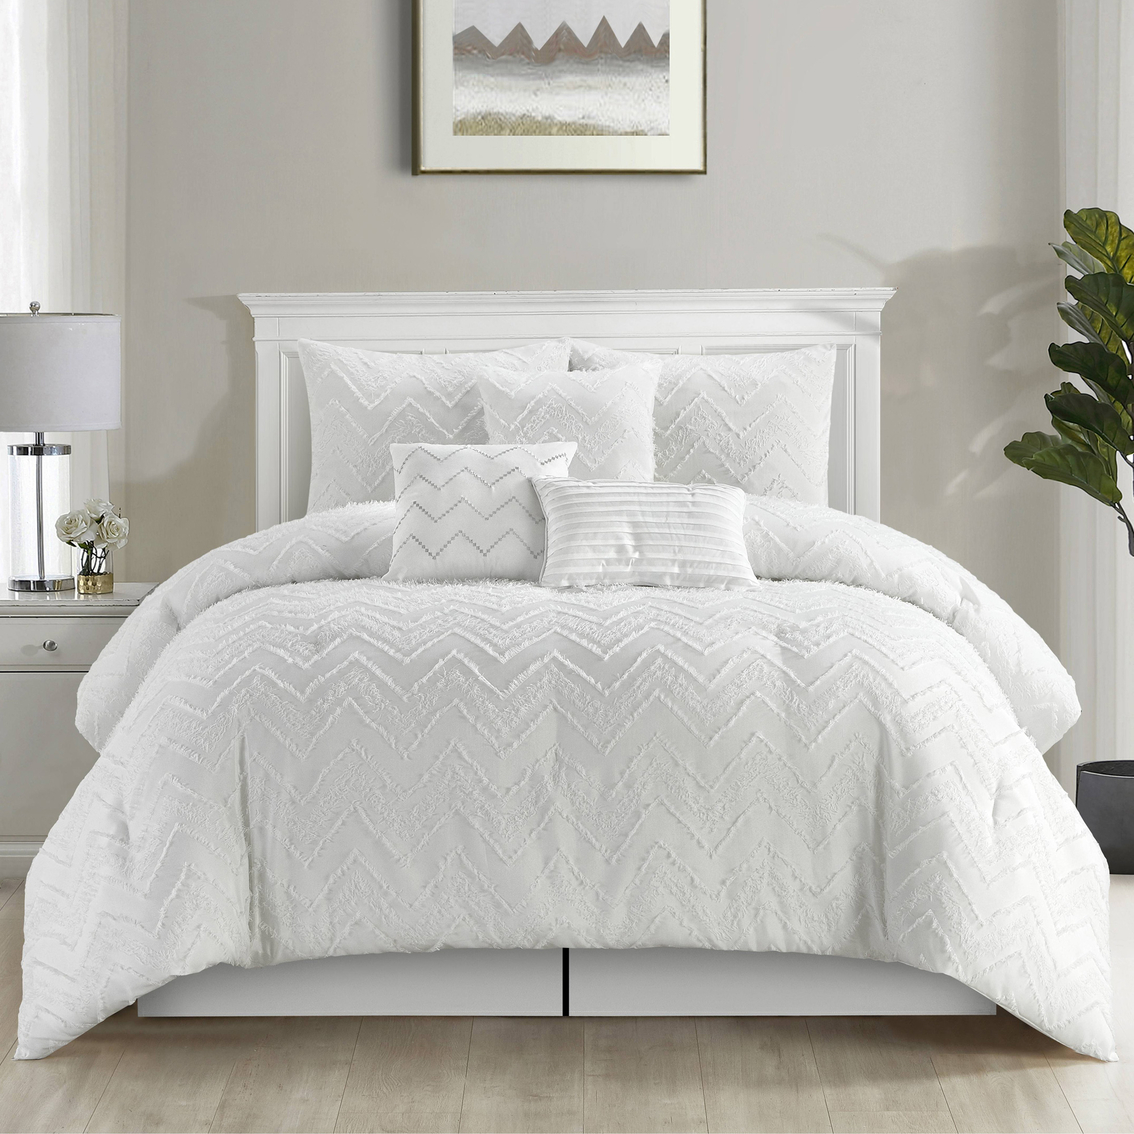 Grand Avenue Farisa 7 Pc. Comforter Set | Bedding Sets | Household ...